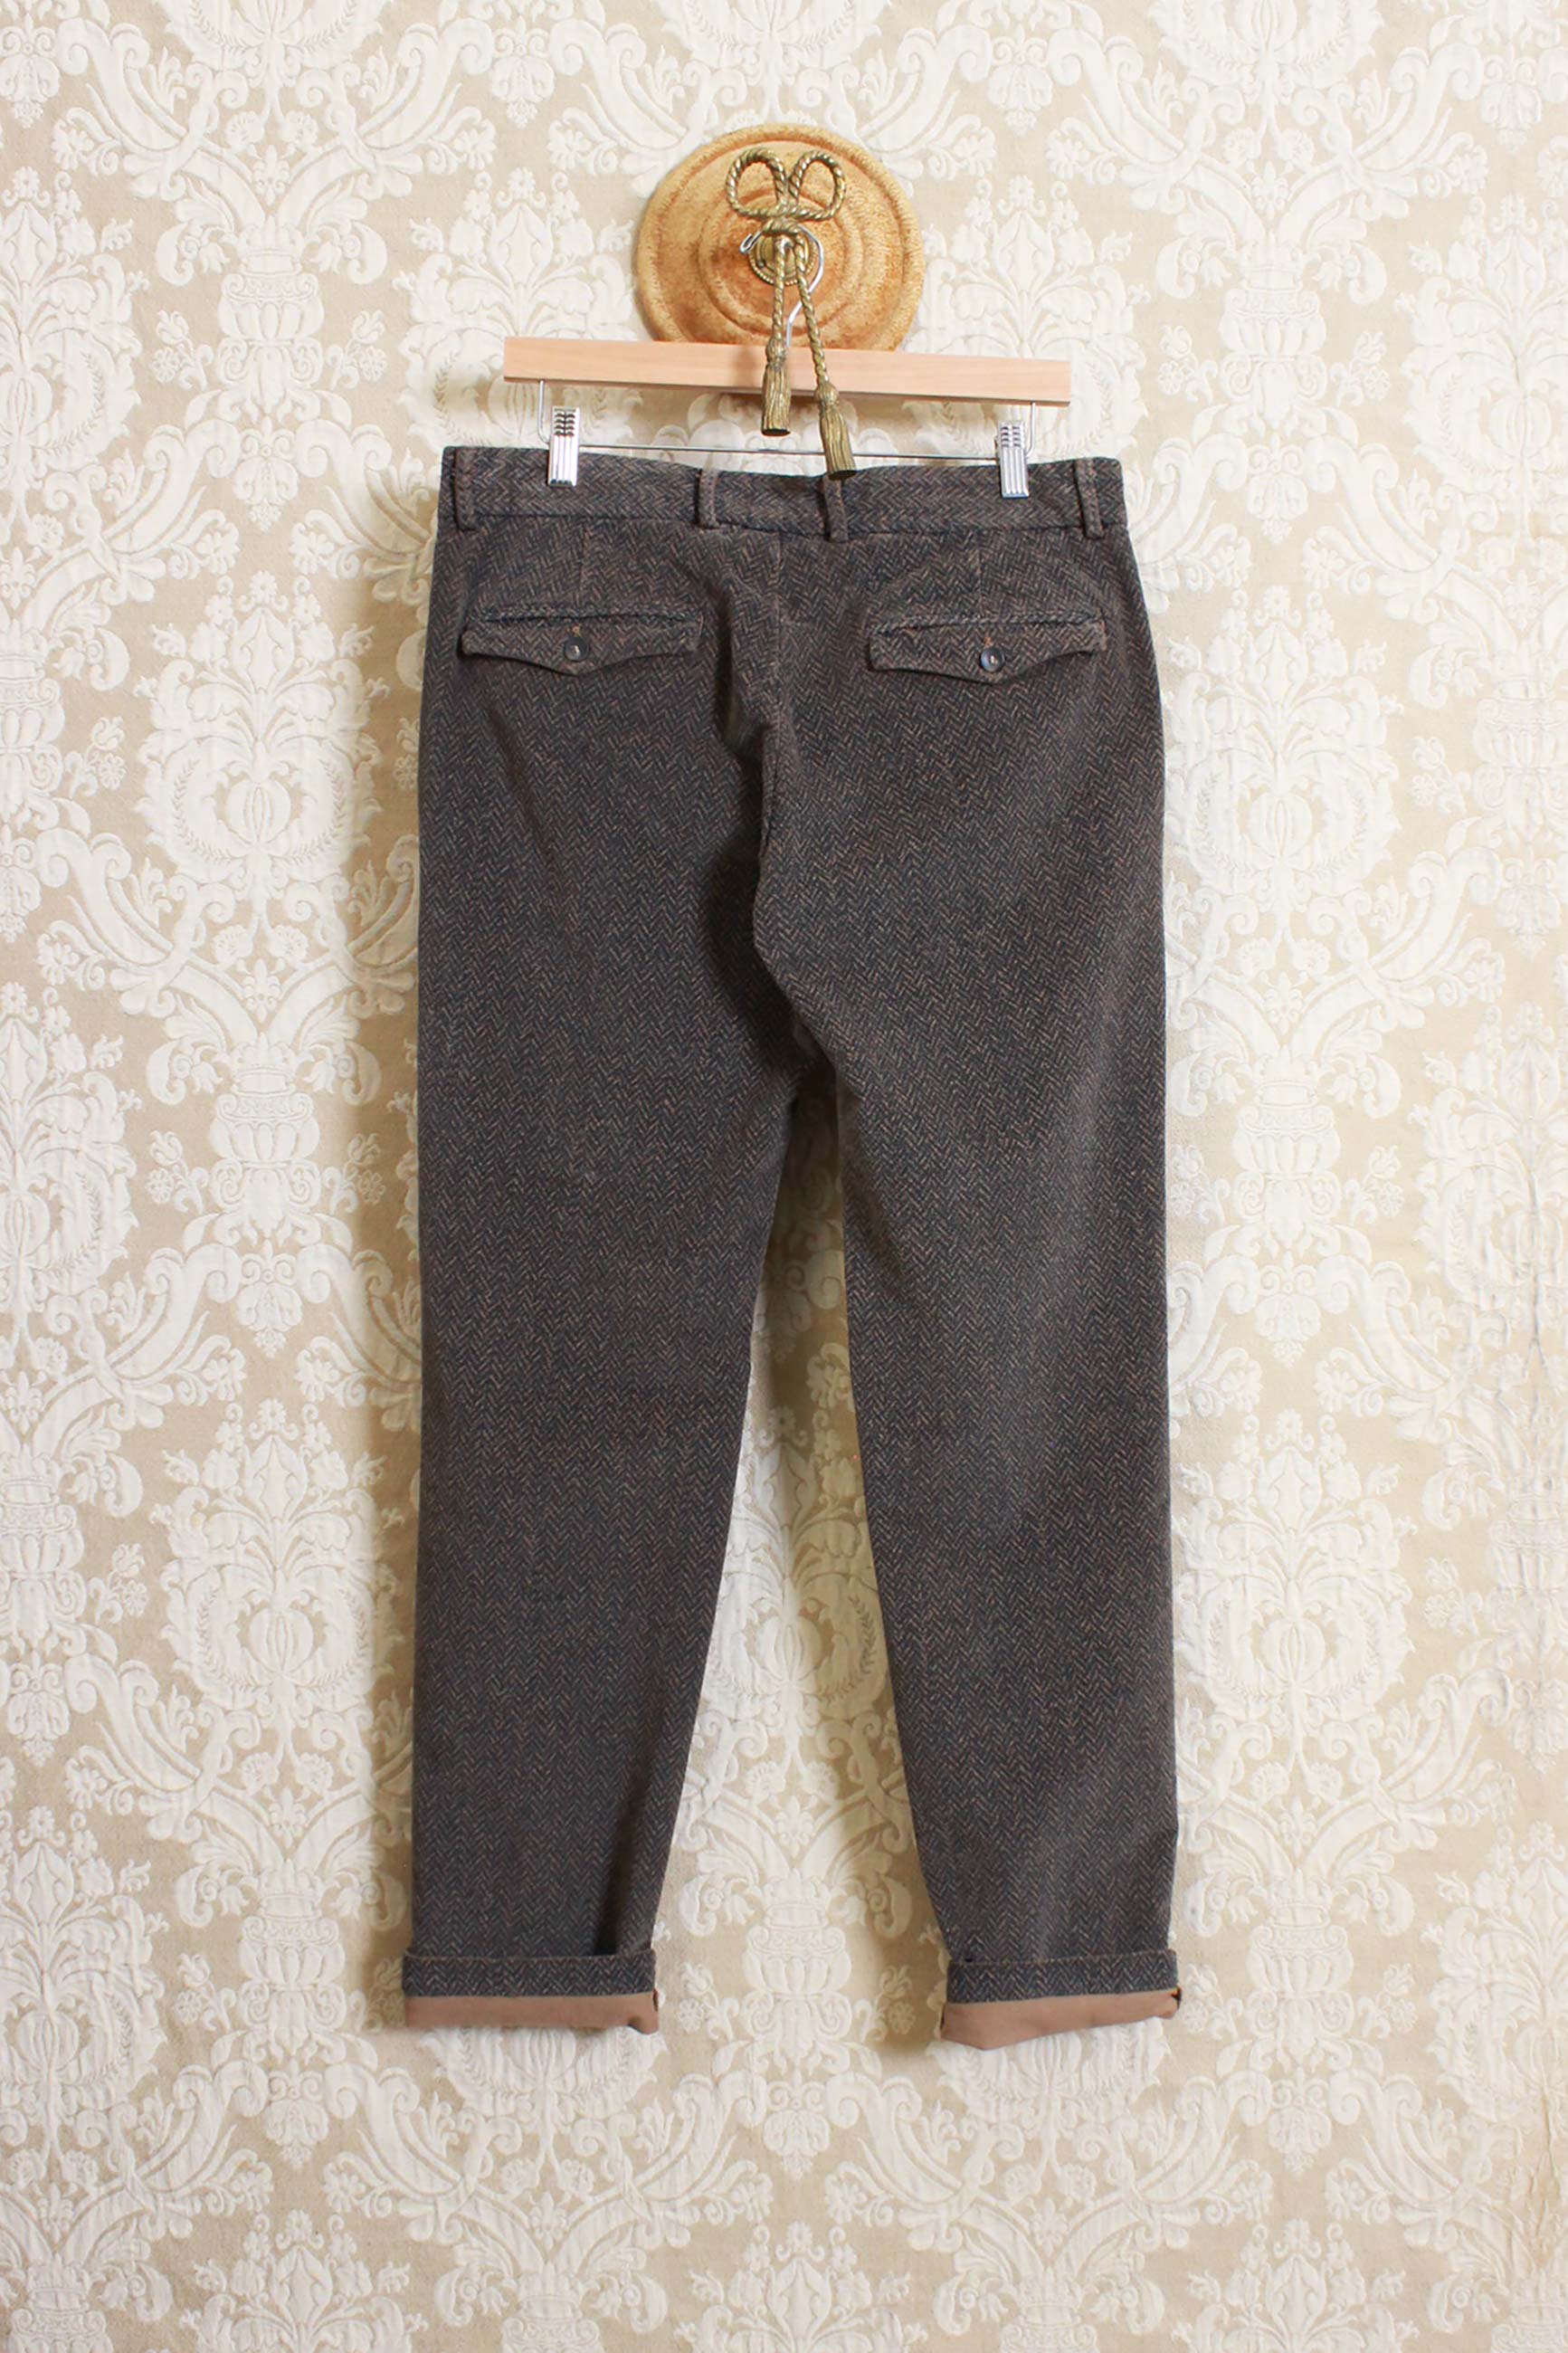 Pantalone Flin di Original Vintage in velluto herringbone color caramello